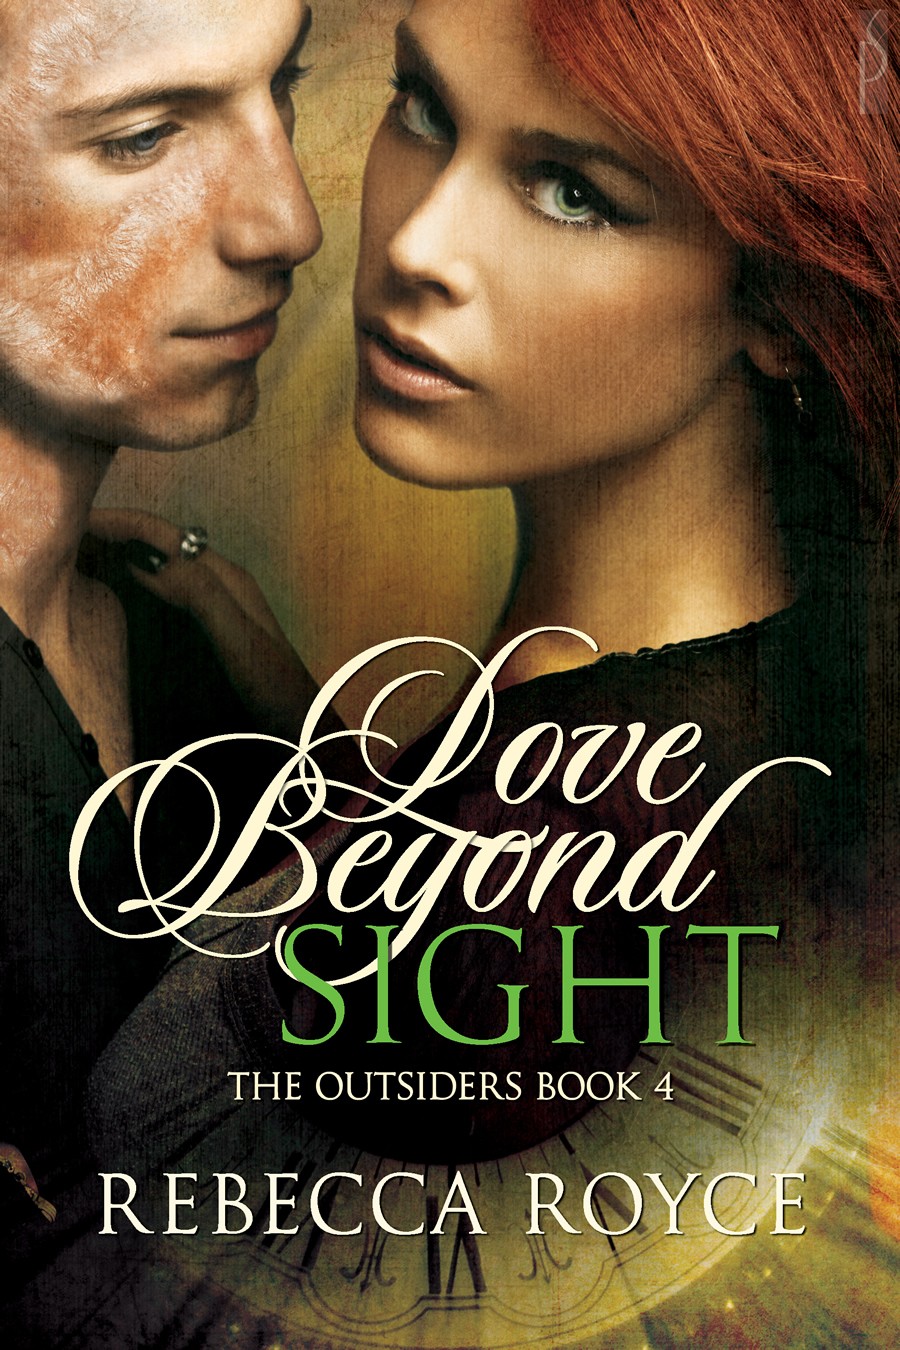 Love Beyond Sight (2012) by Rebecca Royce